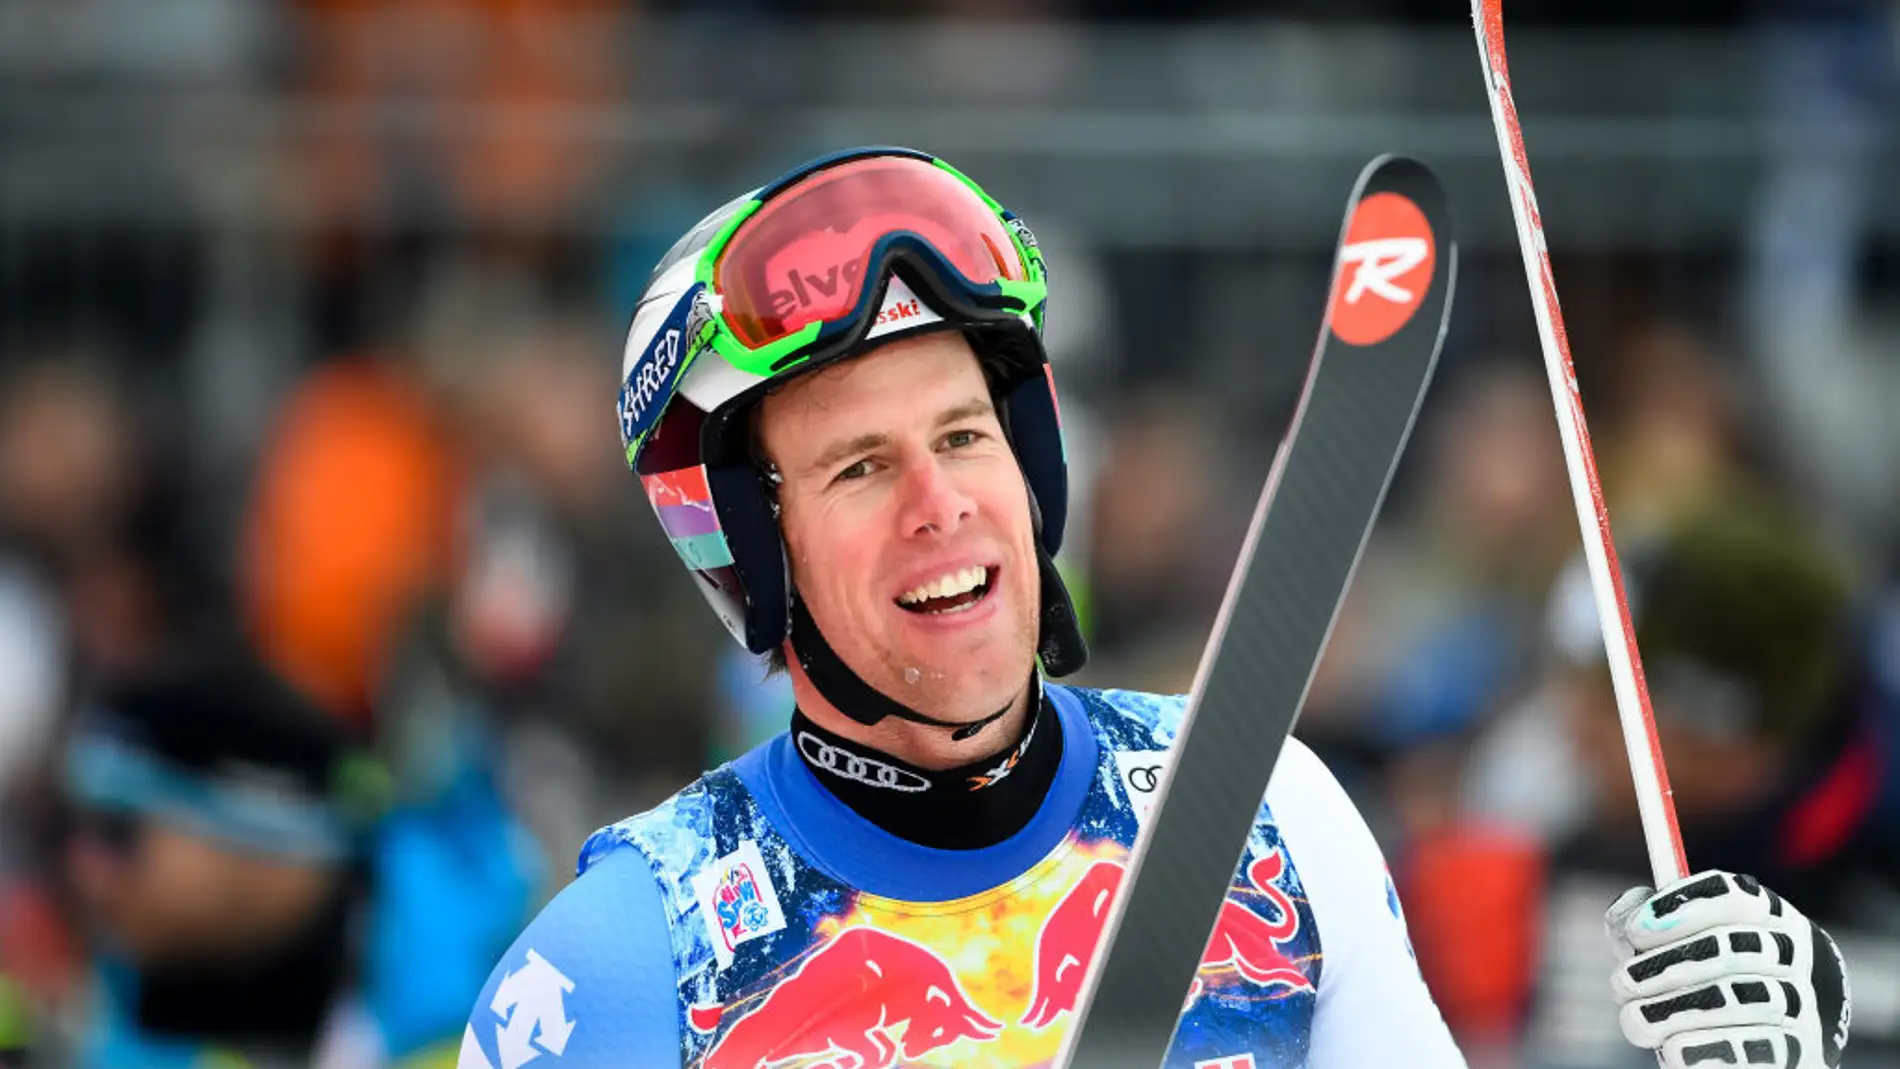 El esquiador Marc Gisin